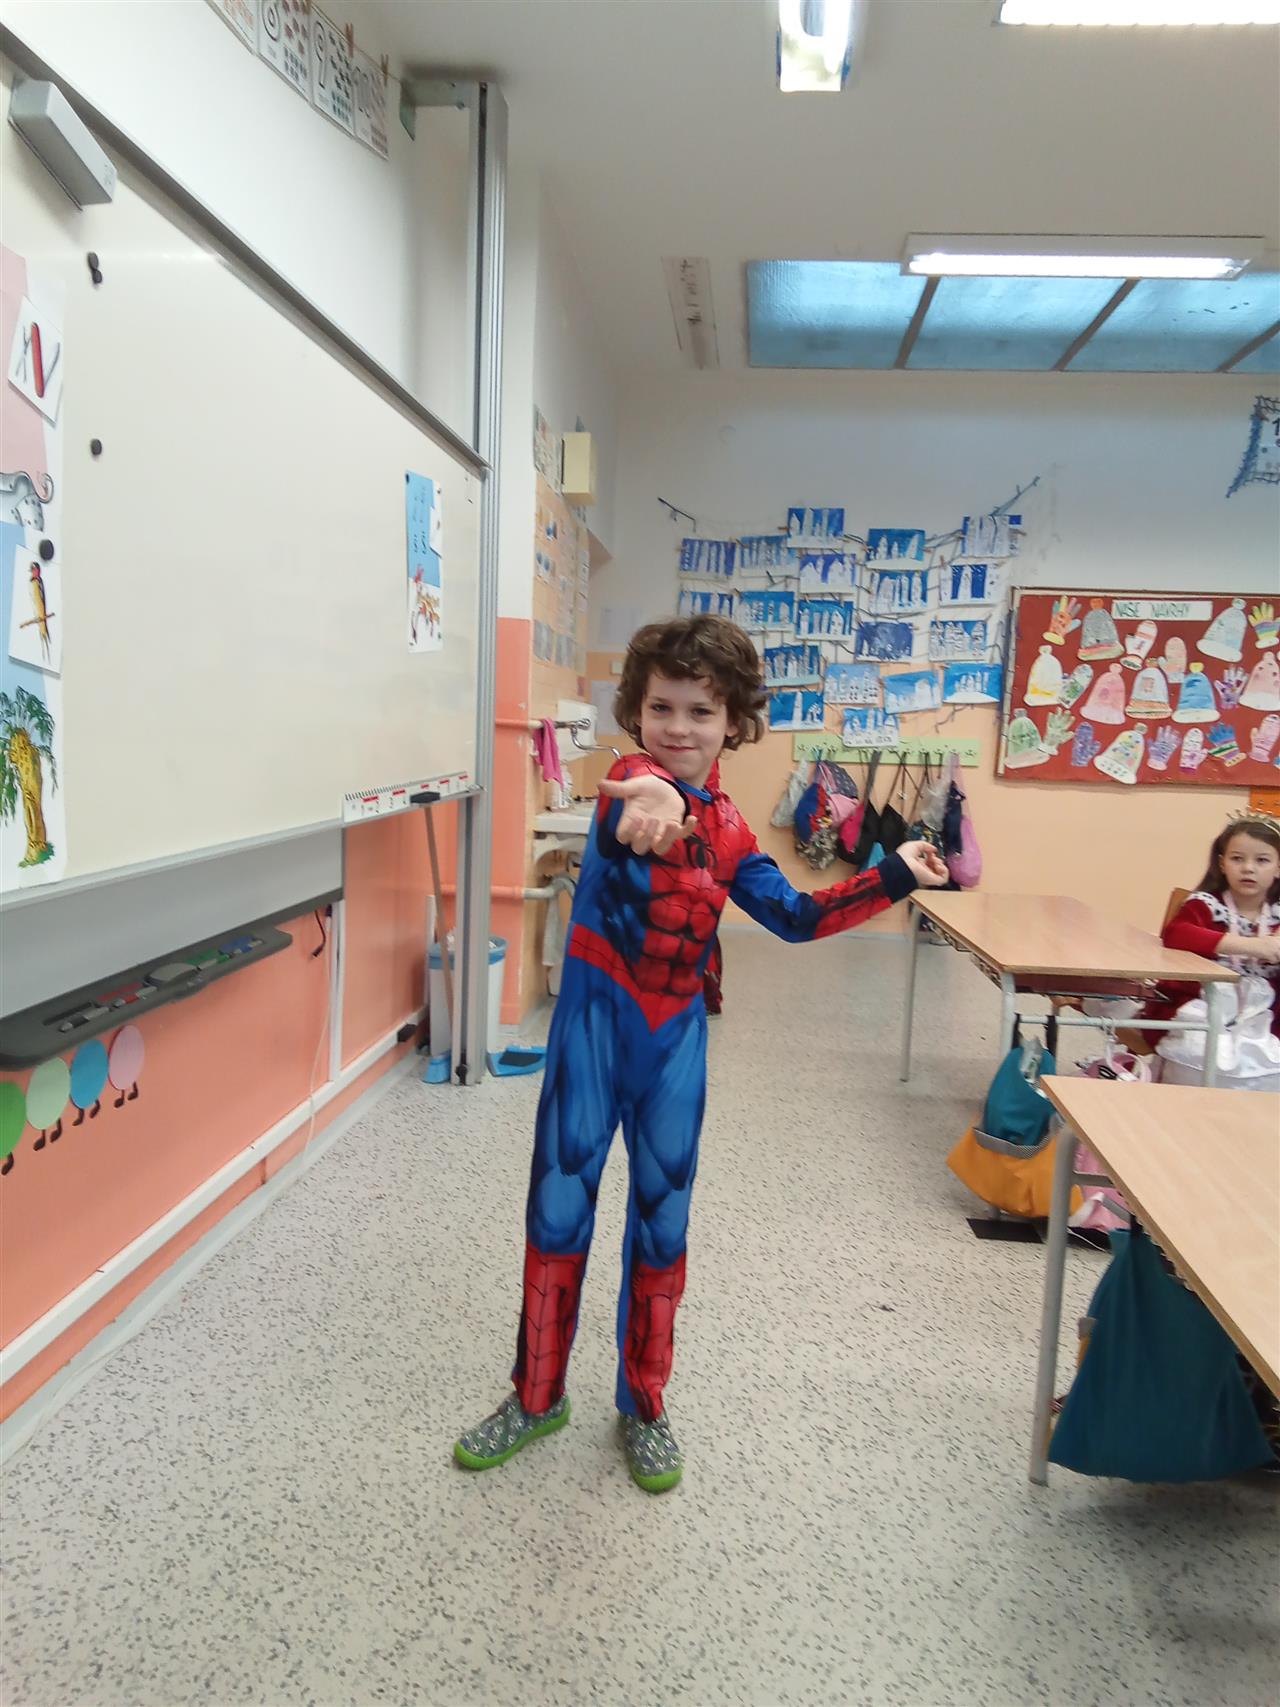 Spiderman 